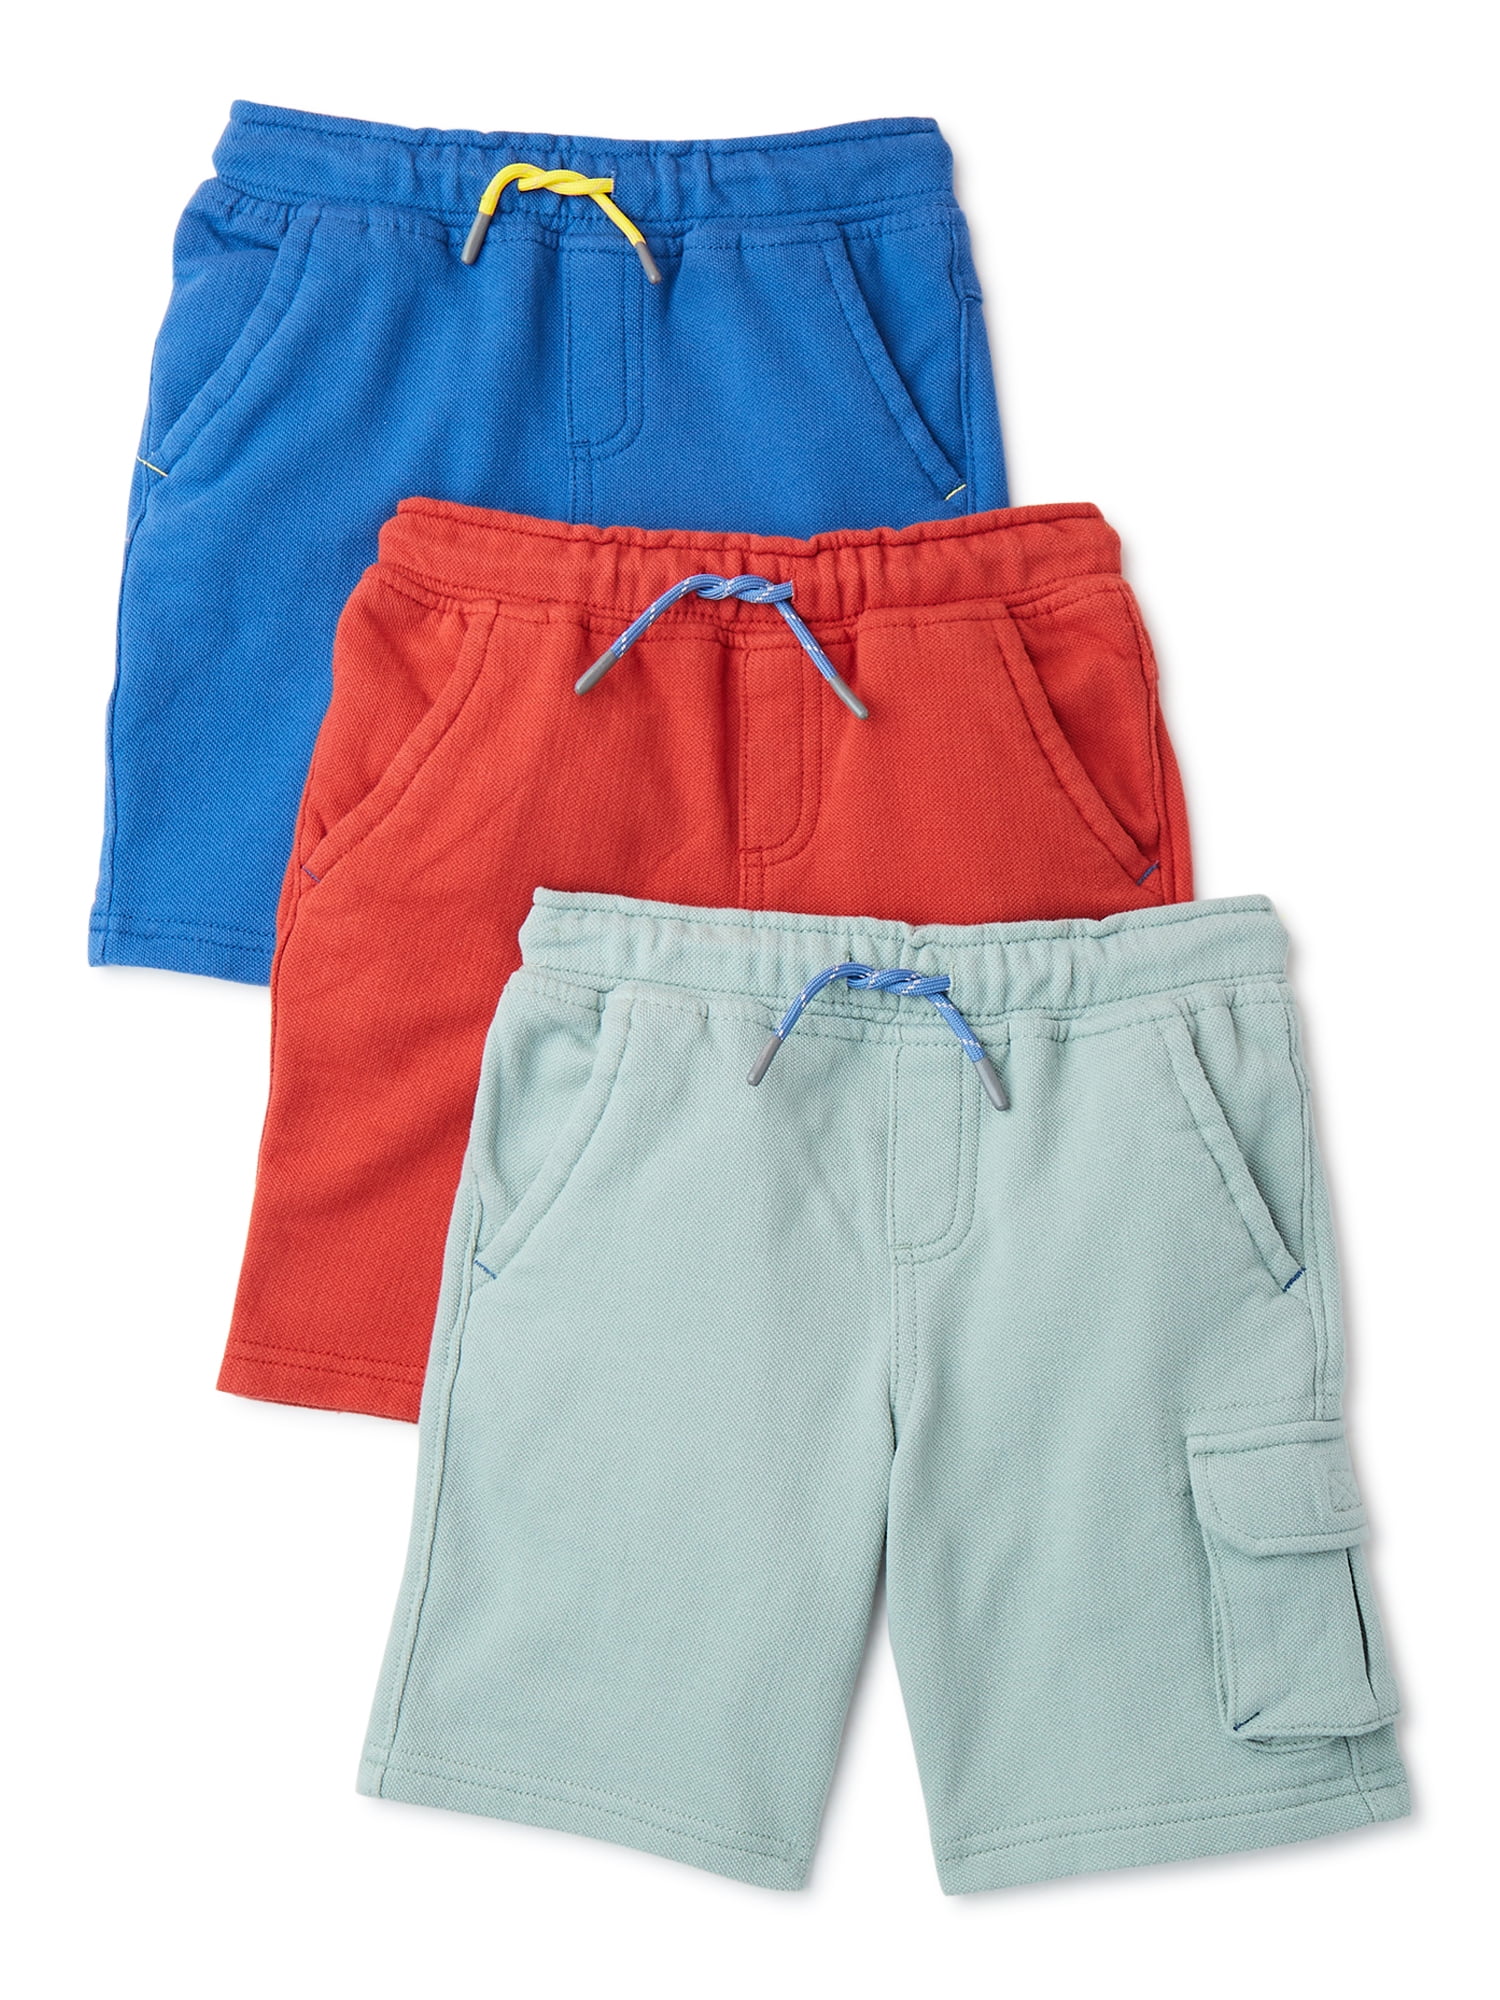 3t51844 Bermuda Shorts Blue 8 Years Boy DressInn Boys Clothing Shorts Bermudas 